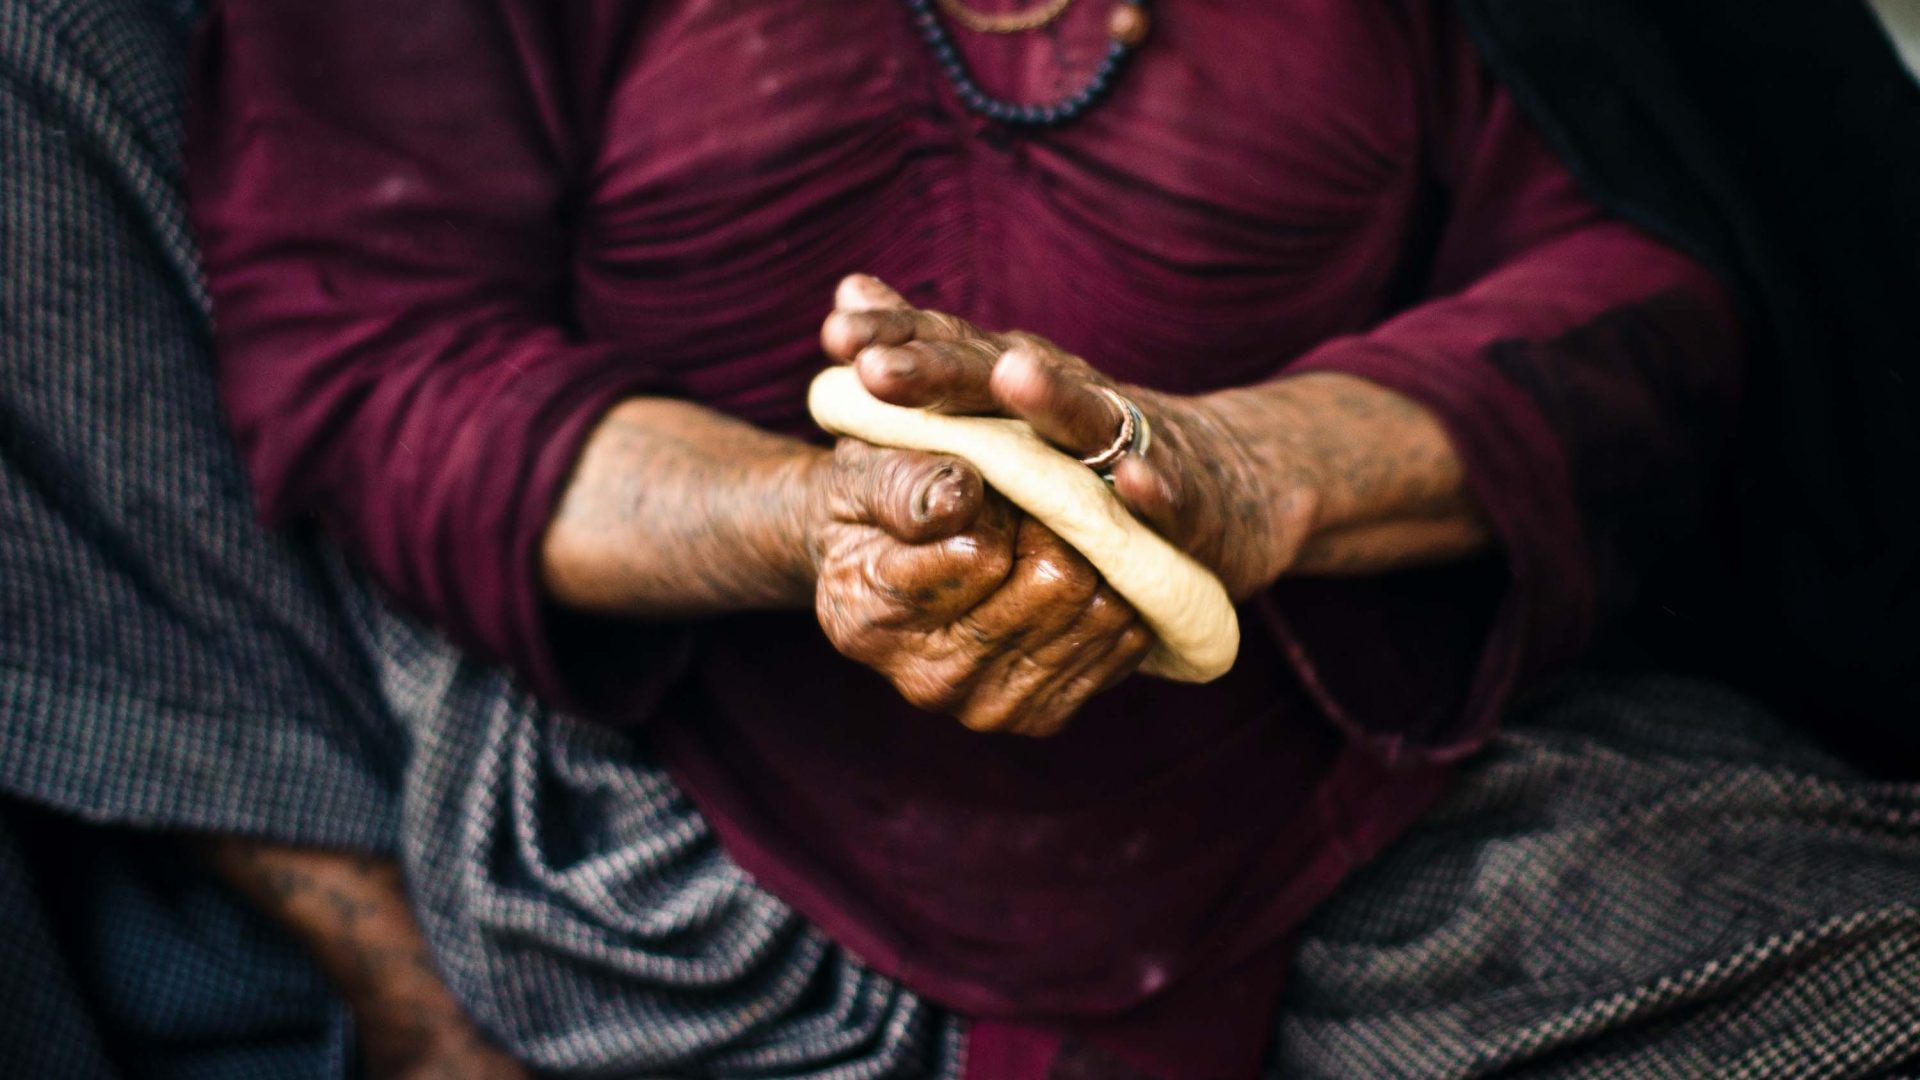 A woman kneads dough to make bread.